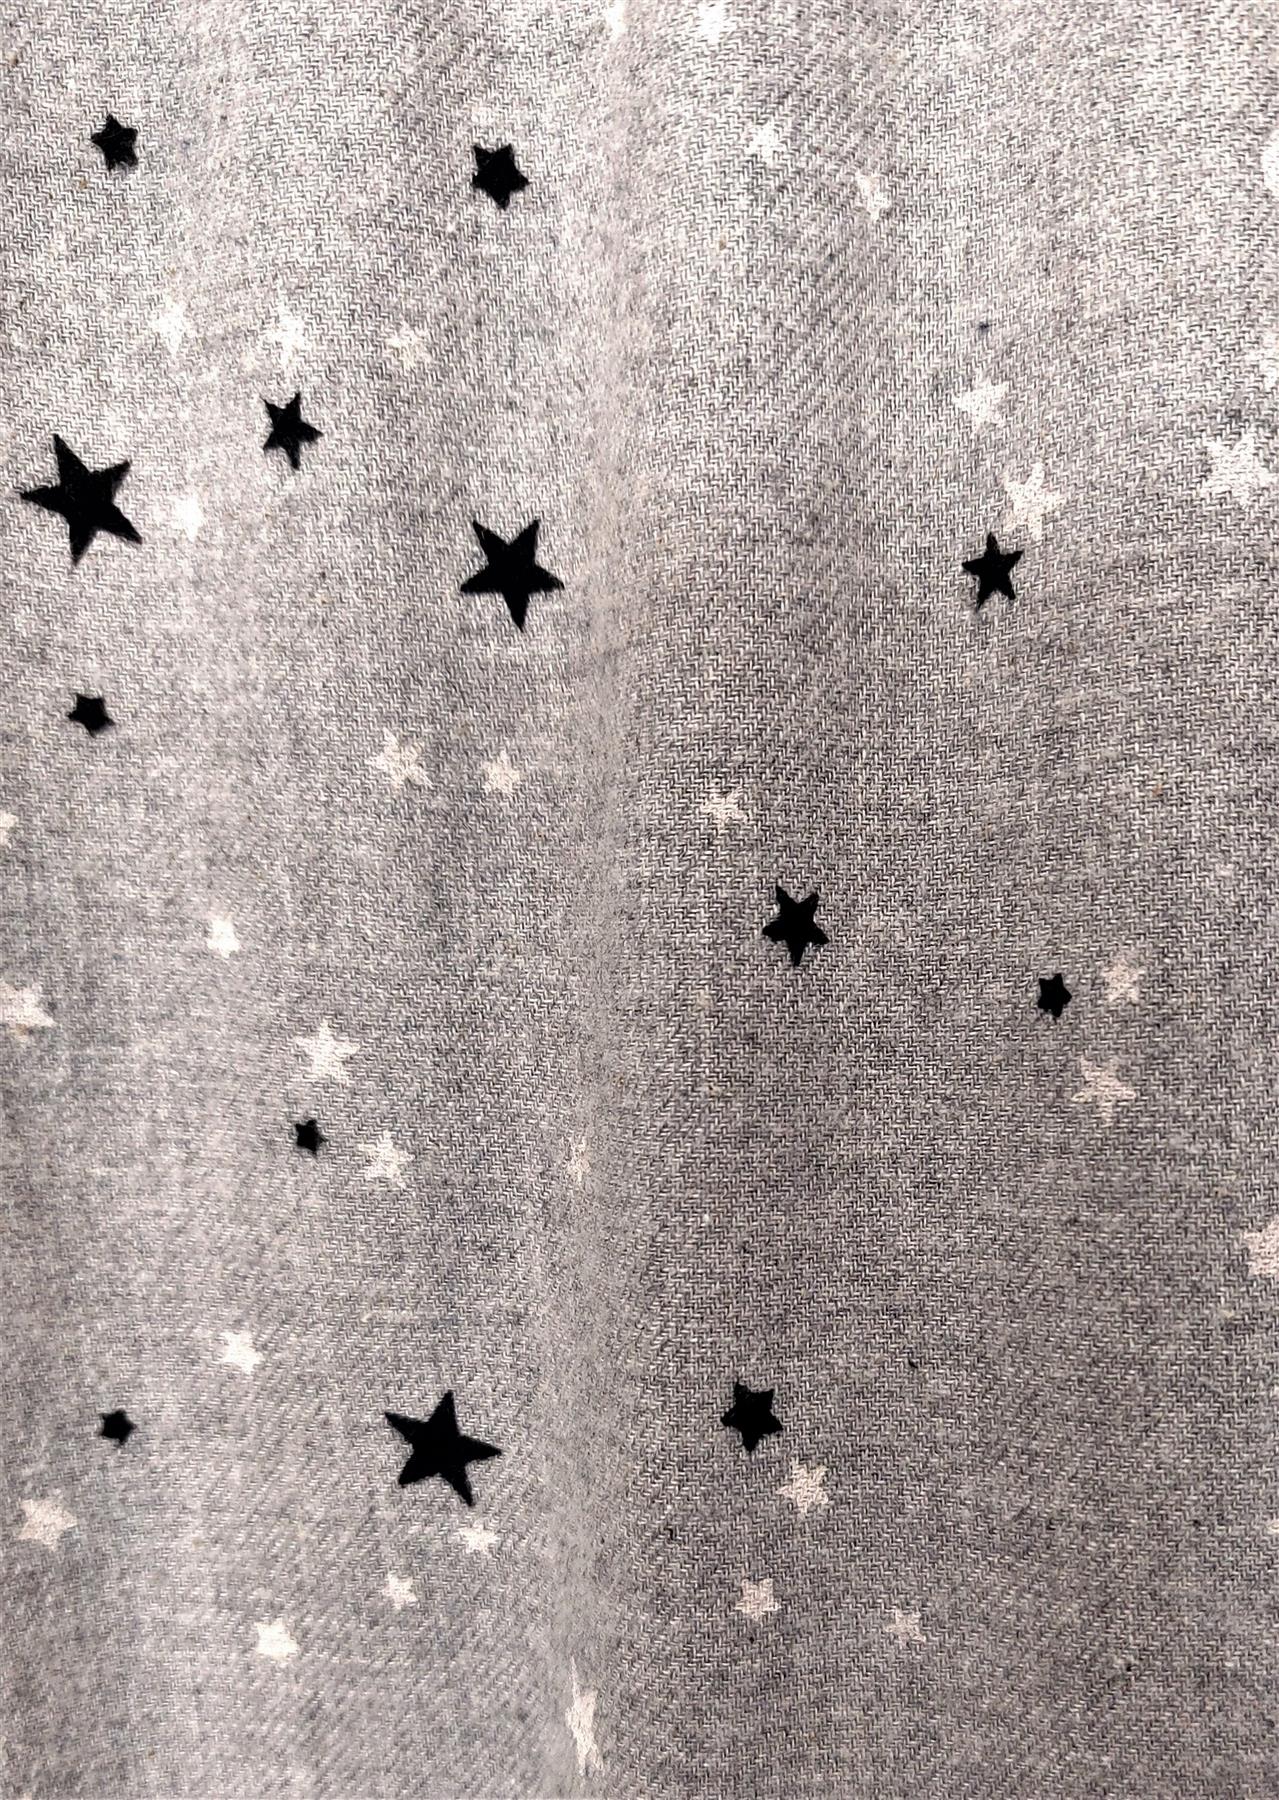 Women's Pyjama Bottoms Pure Cotton Comfy Star Print Brand New